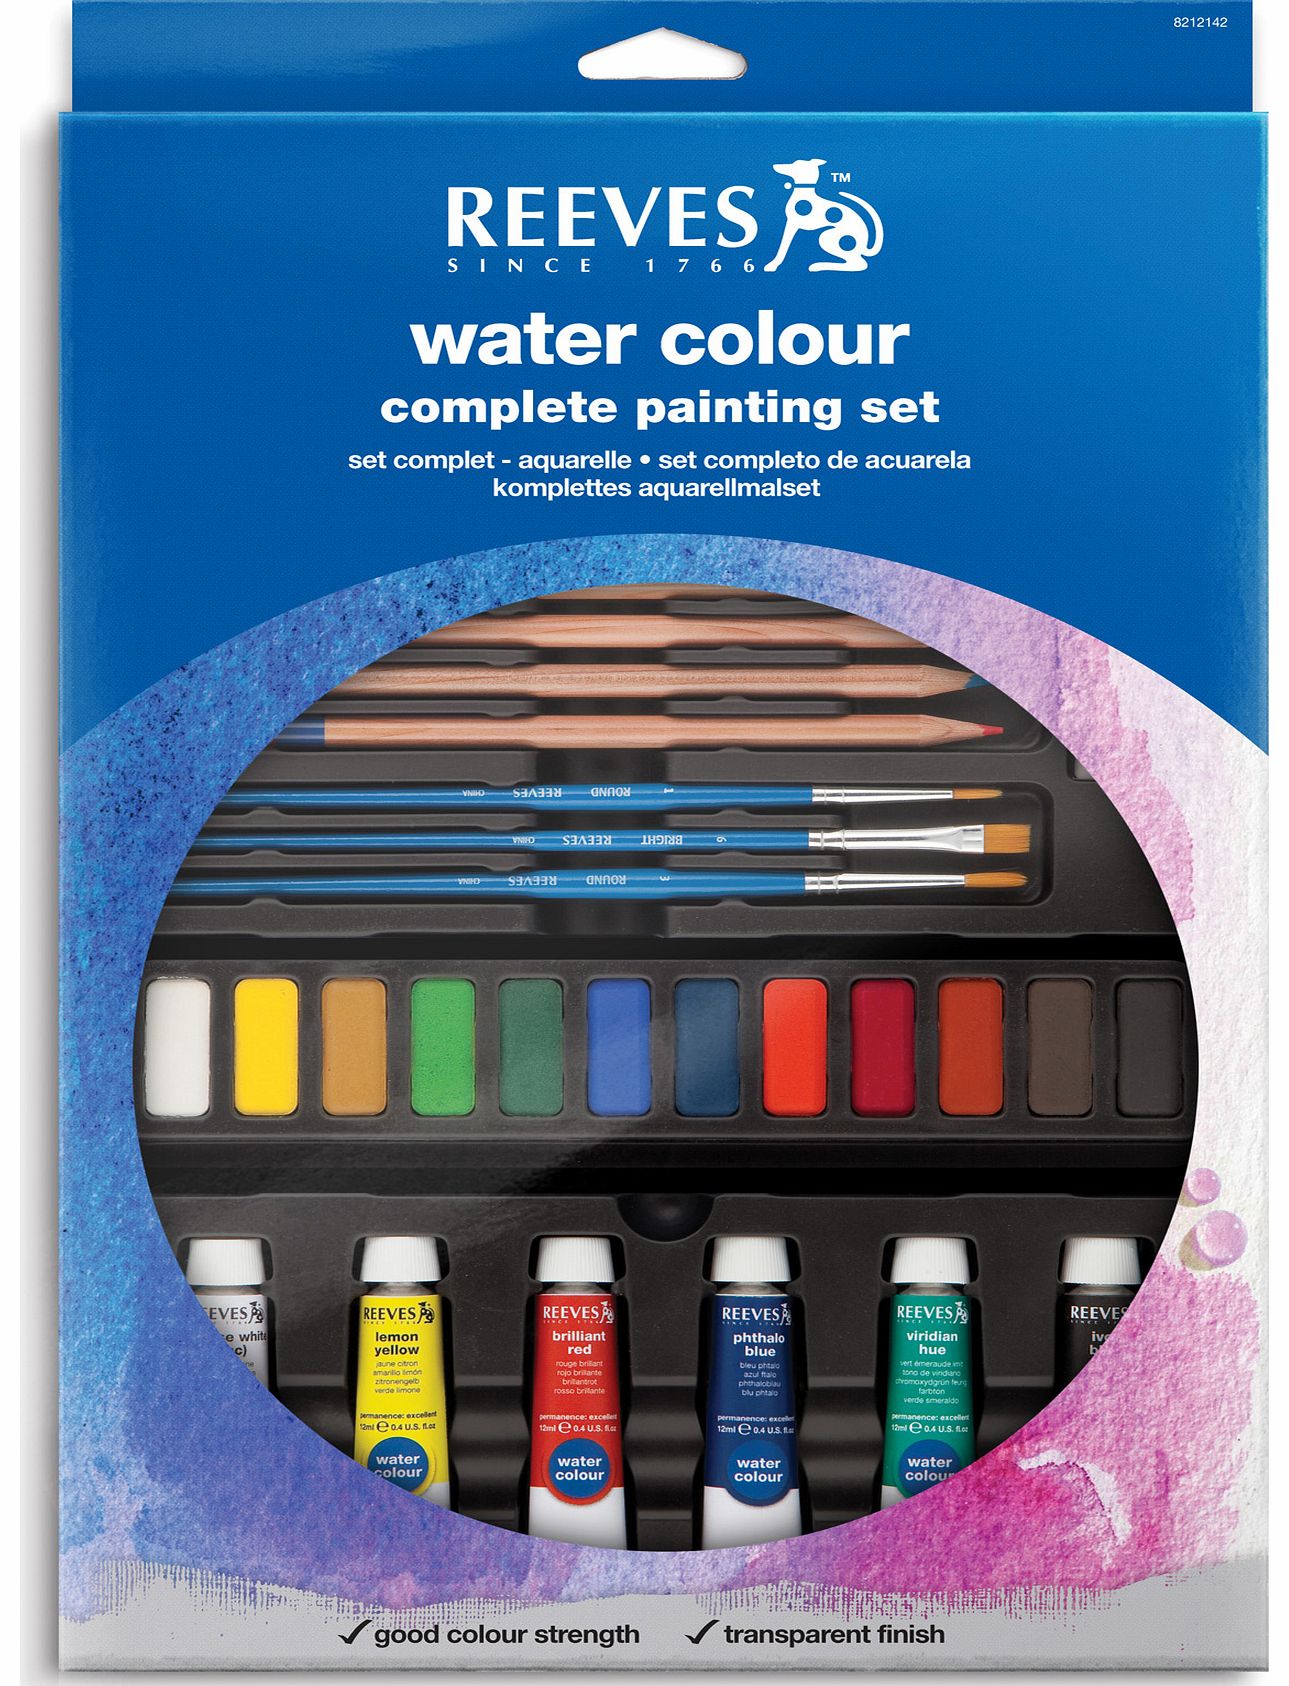 Complete Watercolour Painting Set